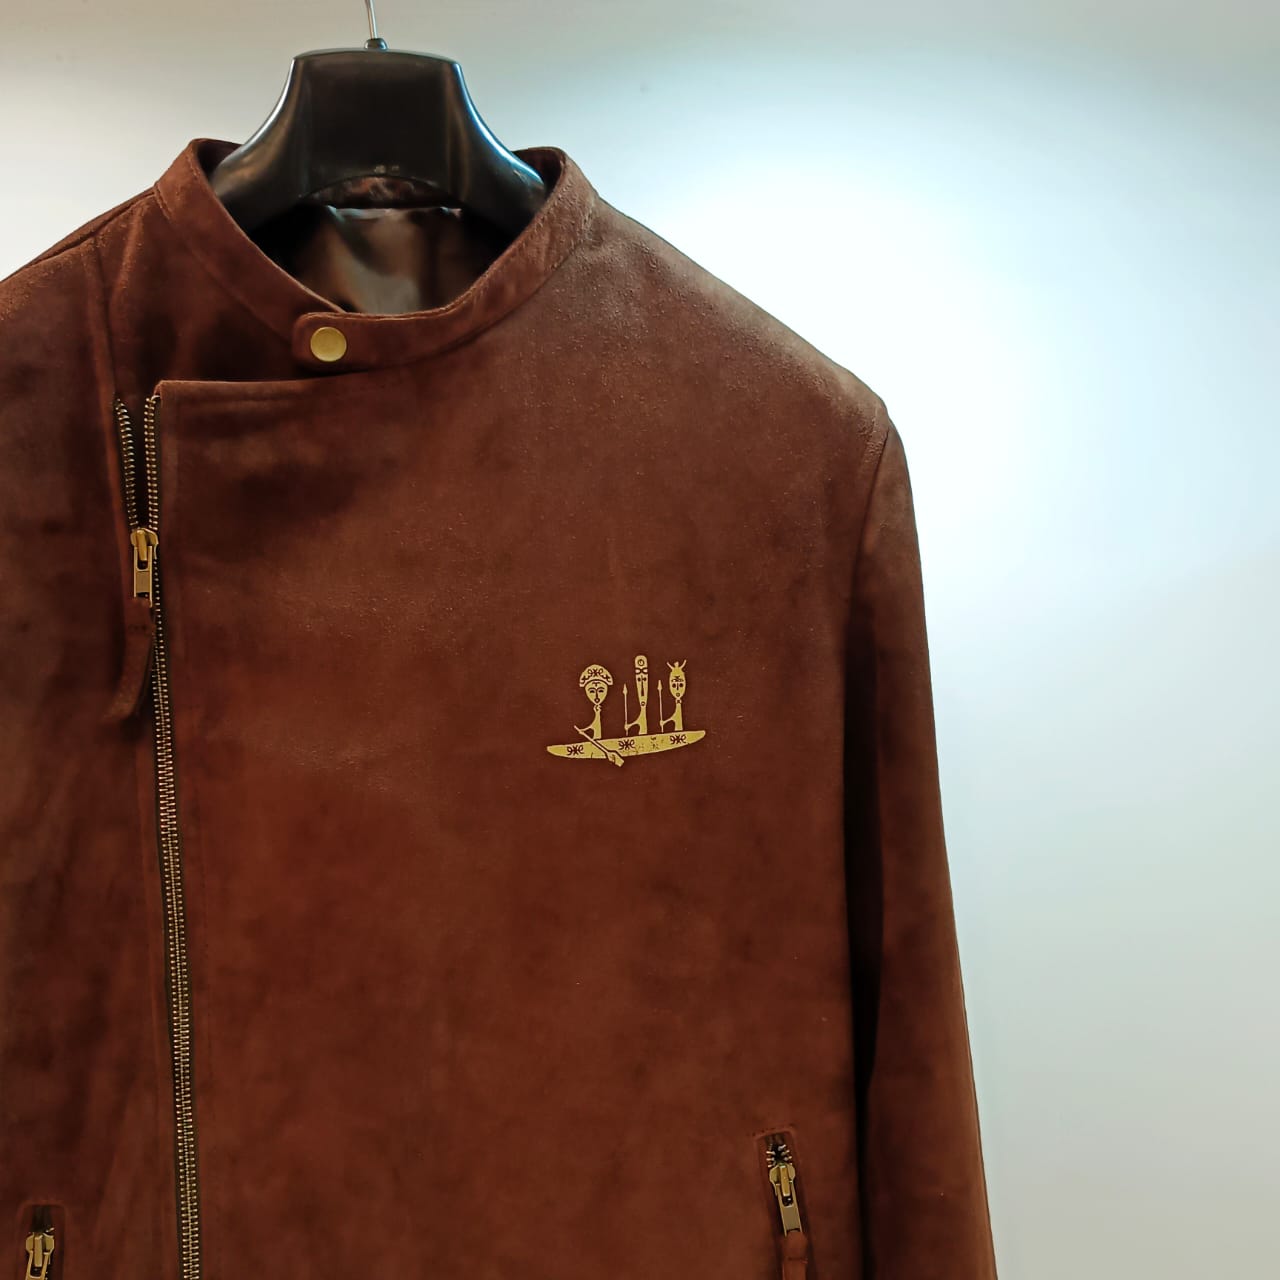 Nubuck Brown Leather Jacket